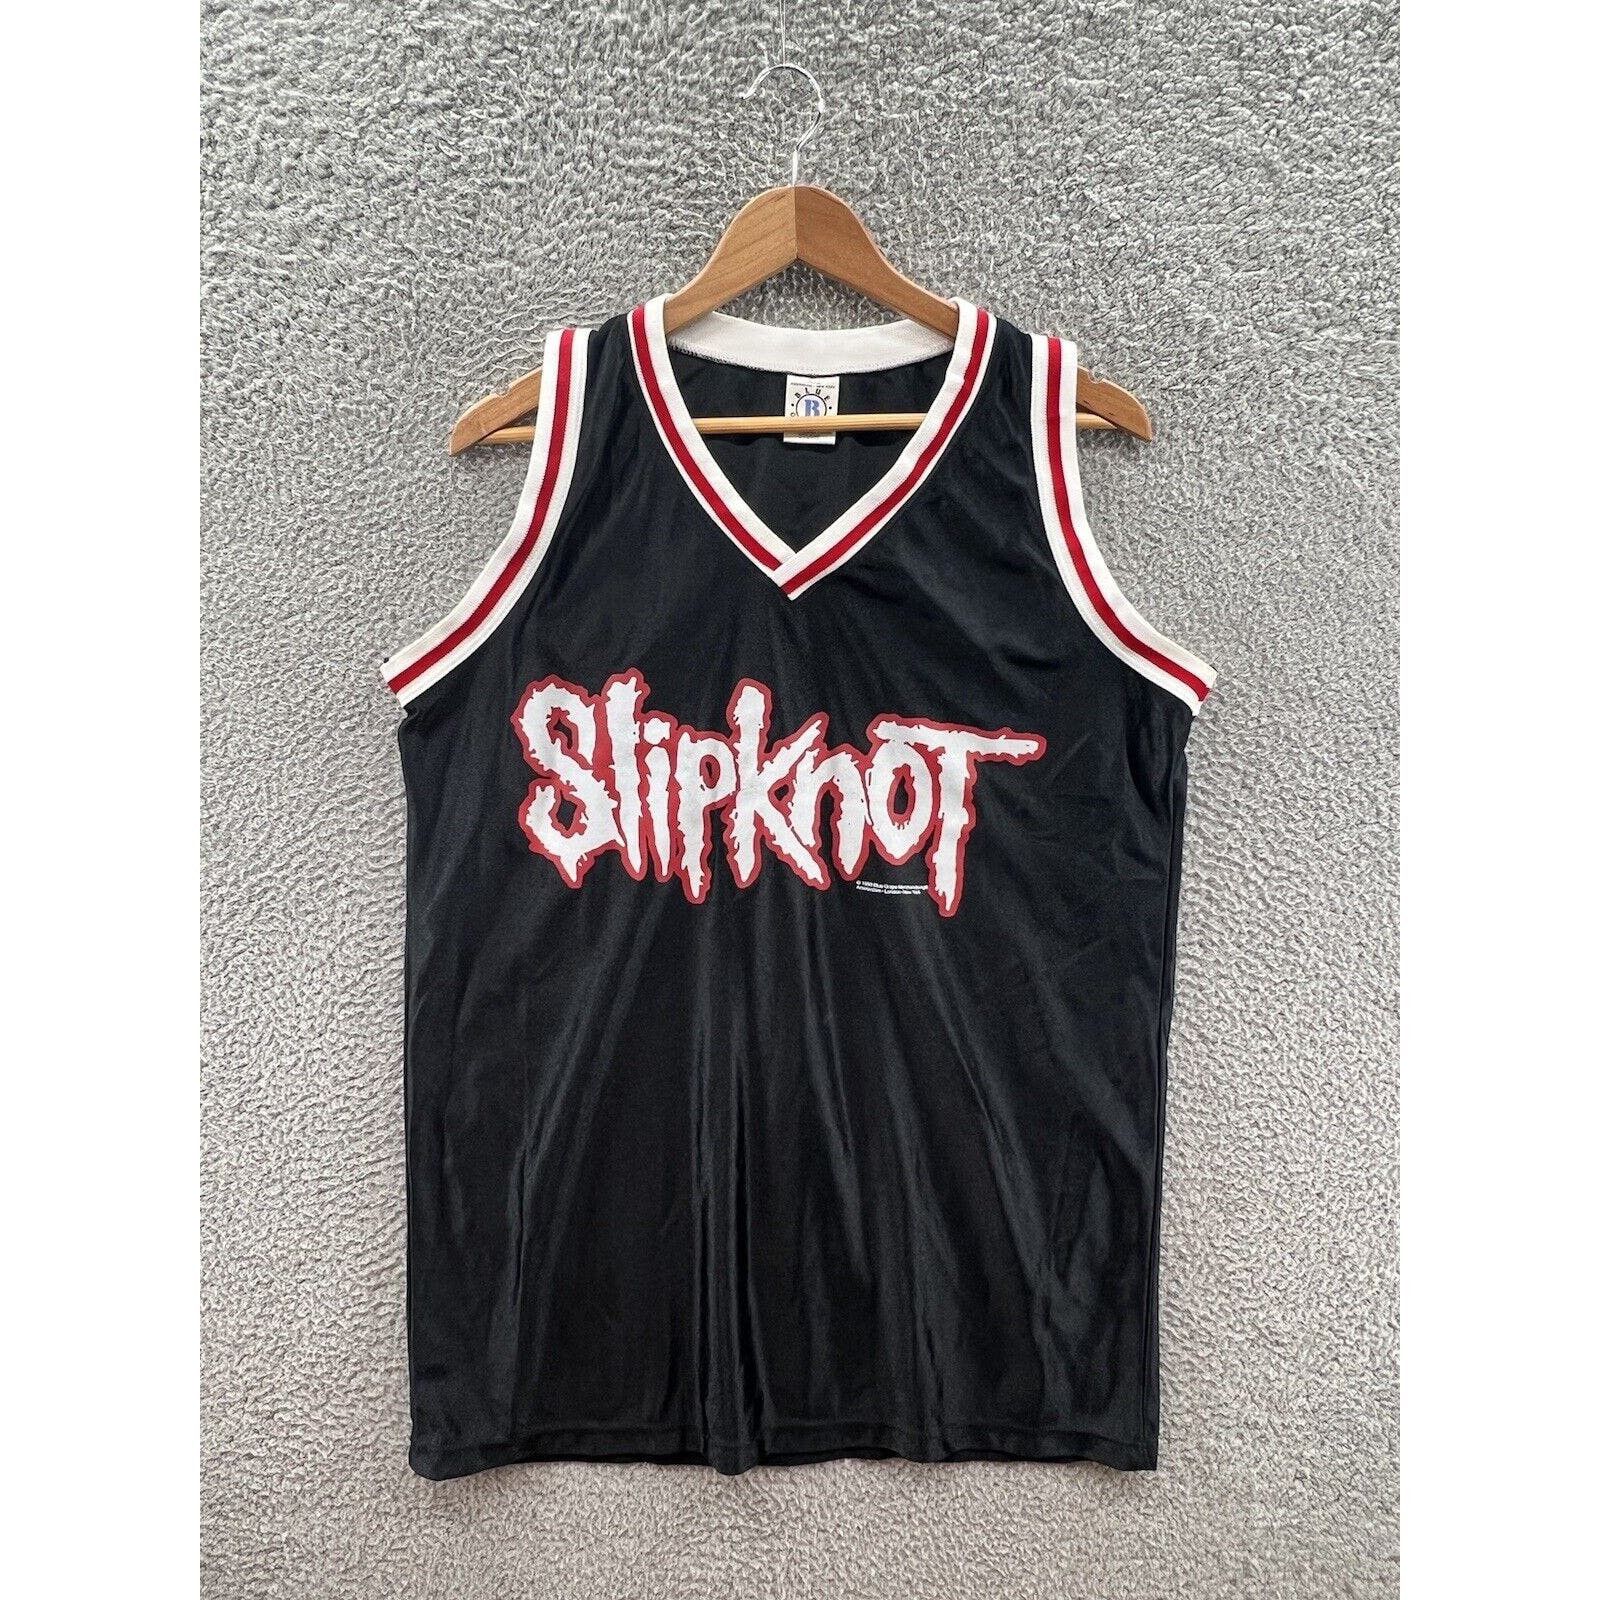 Other Blue Grape Vintage 1999 Slipknot Black Basketball Jersey XL Size XL / US 12-14 / IT 48-50 - 1 Preview